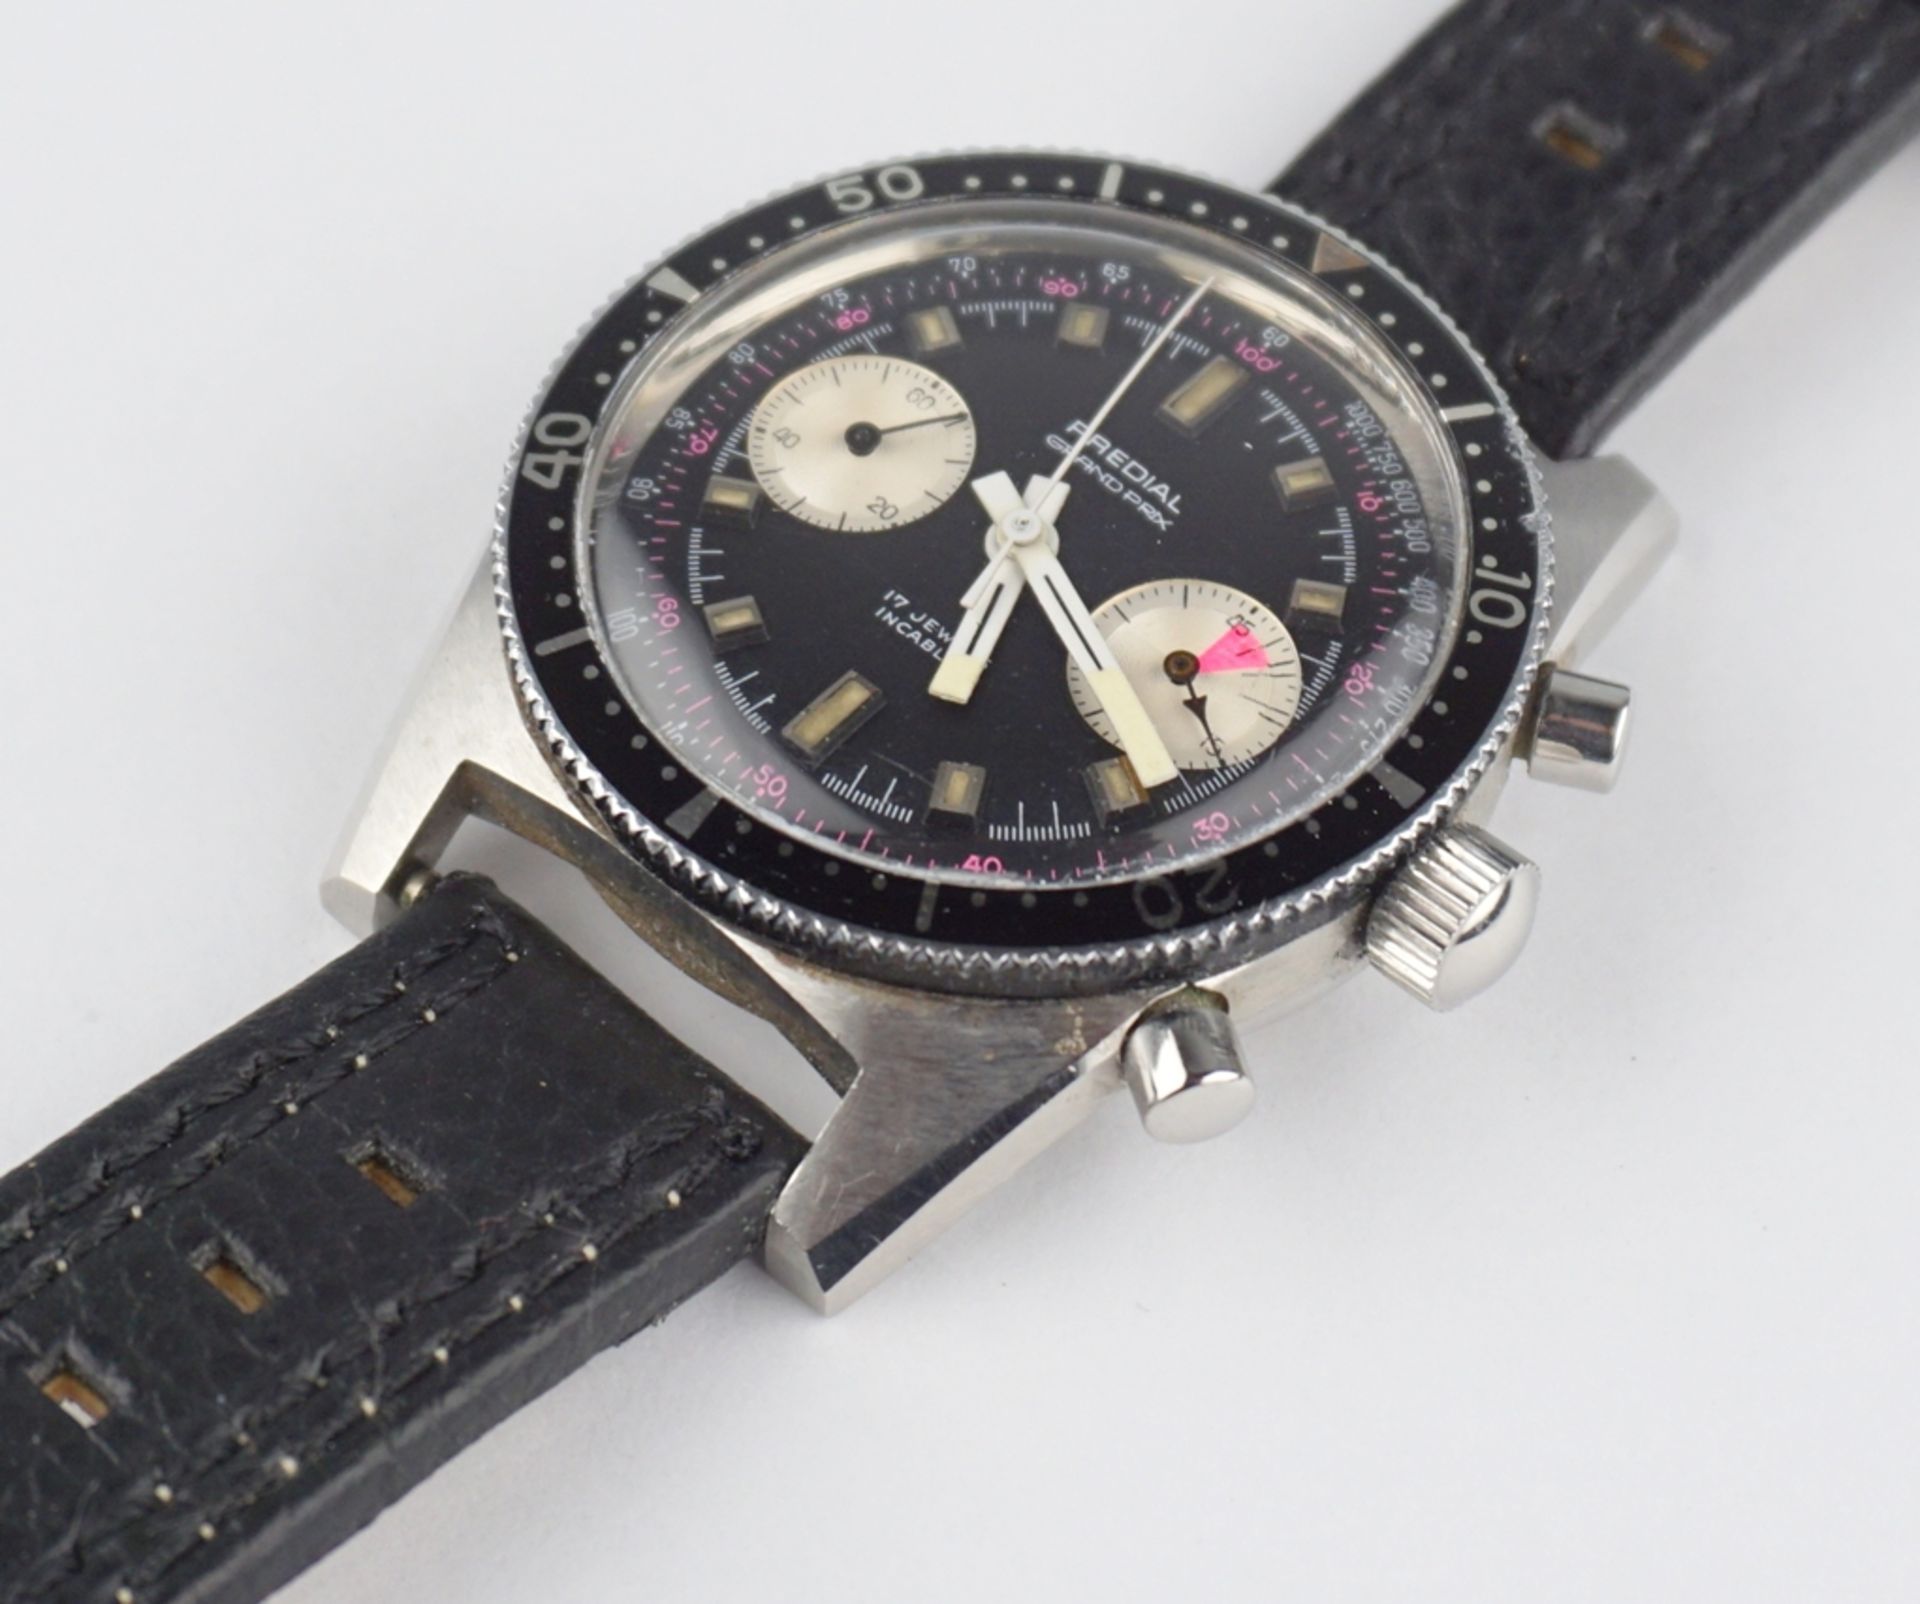 Armbanduhr Predial Grand Prix Chronograph, 1970er Jahre - Image 2 of 6